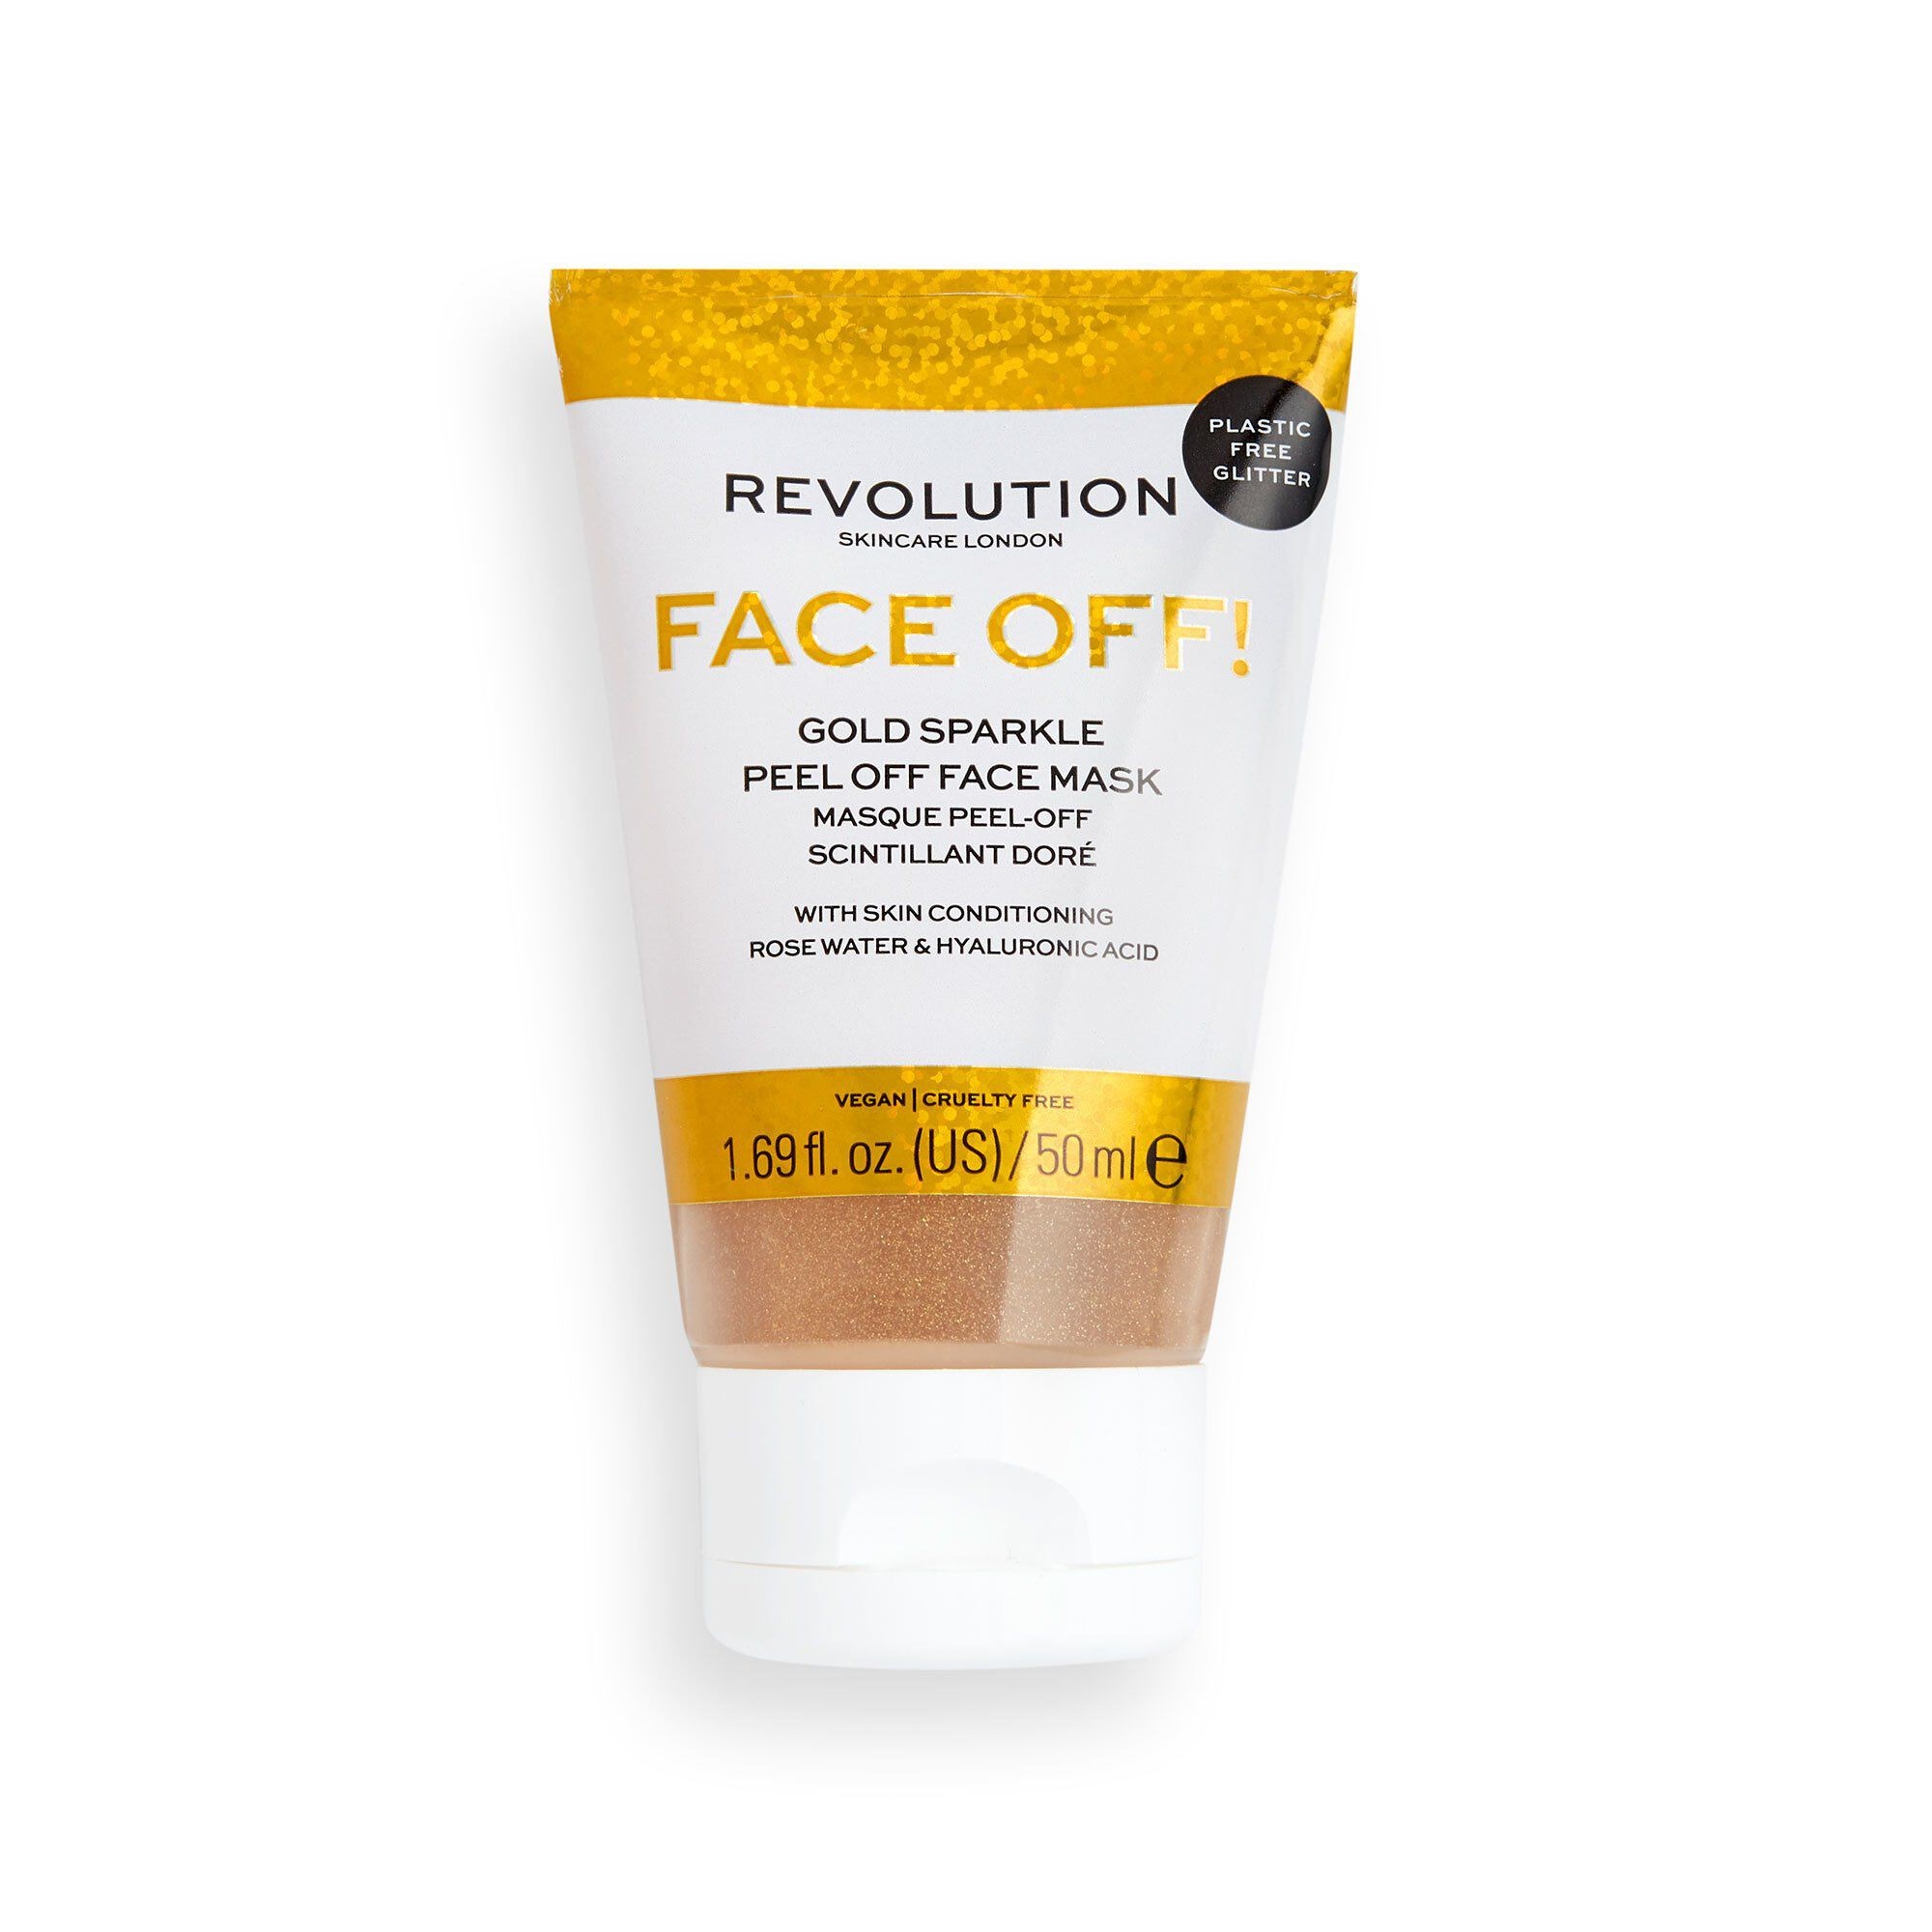 Masque Peel-Off Scintillant Doré - Face Off! Gold Sparkle Peel Off Face Mask